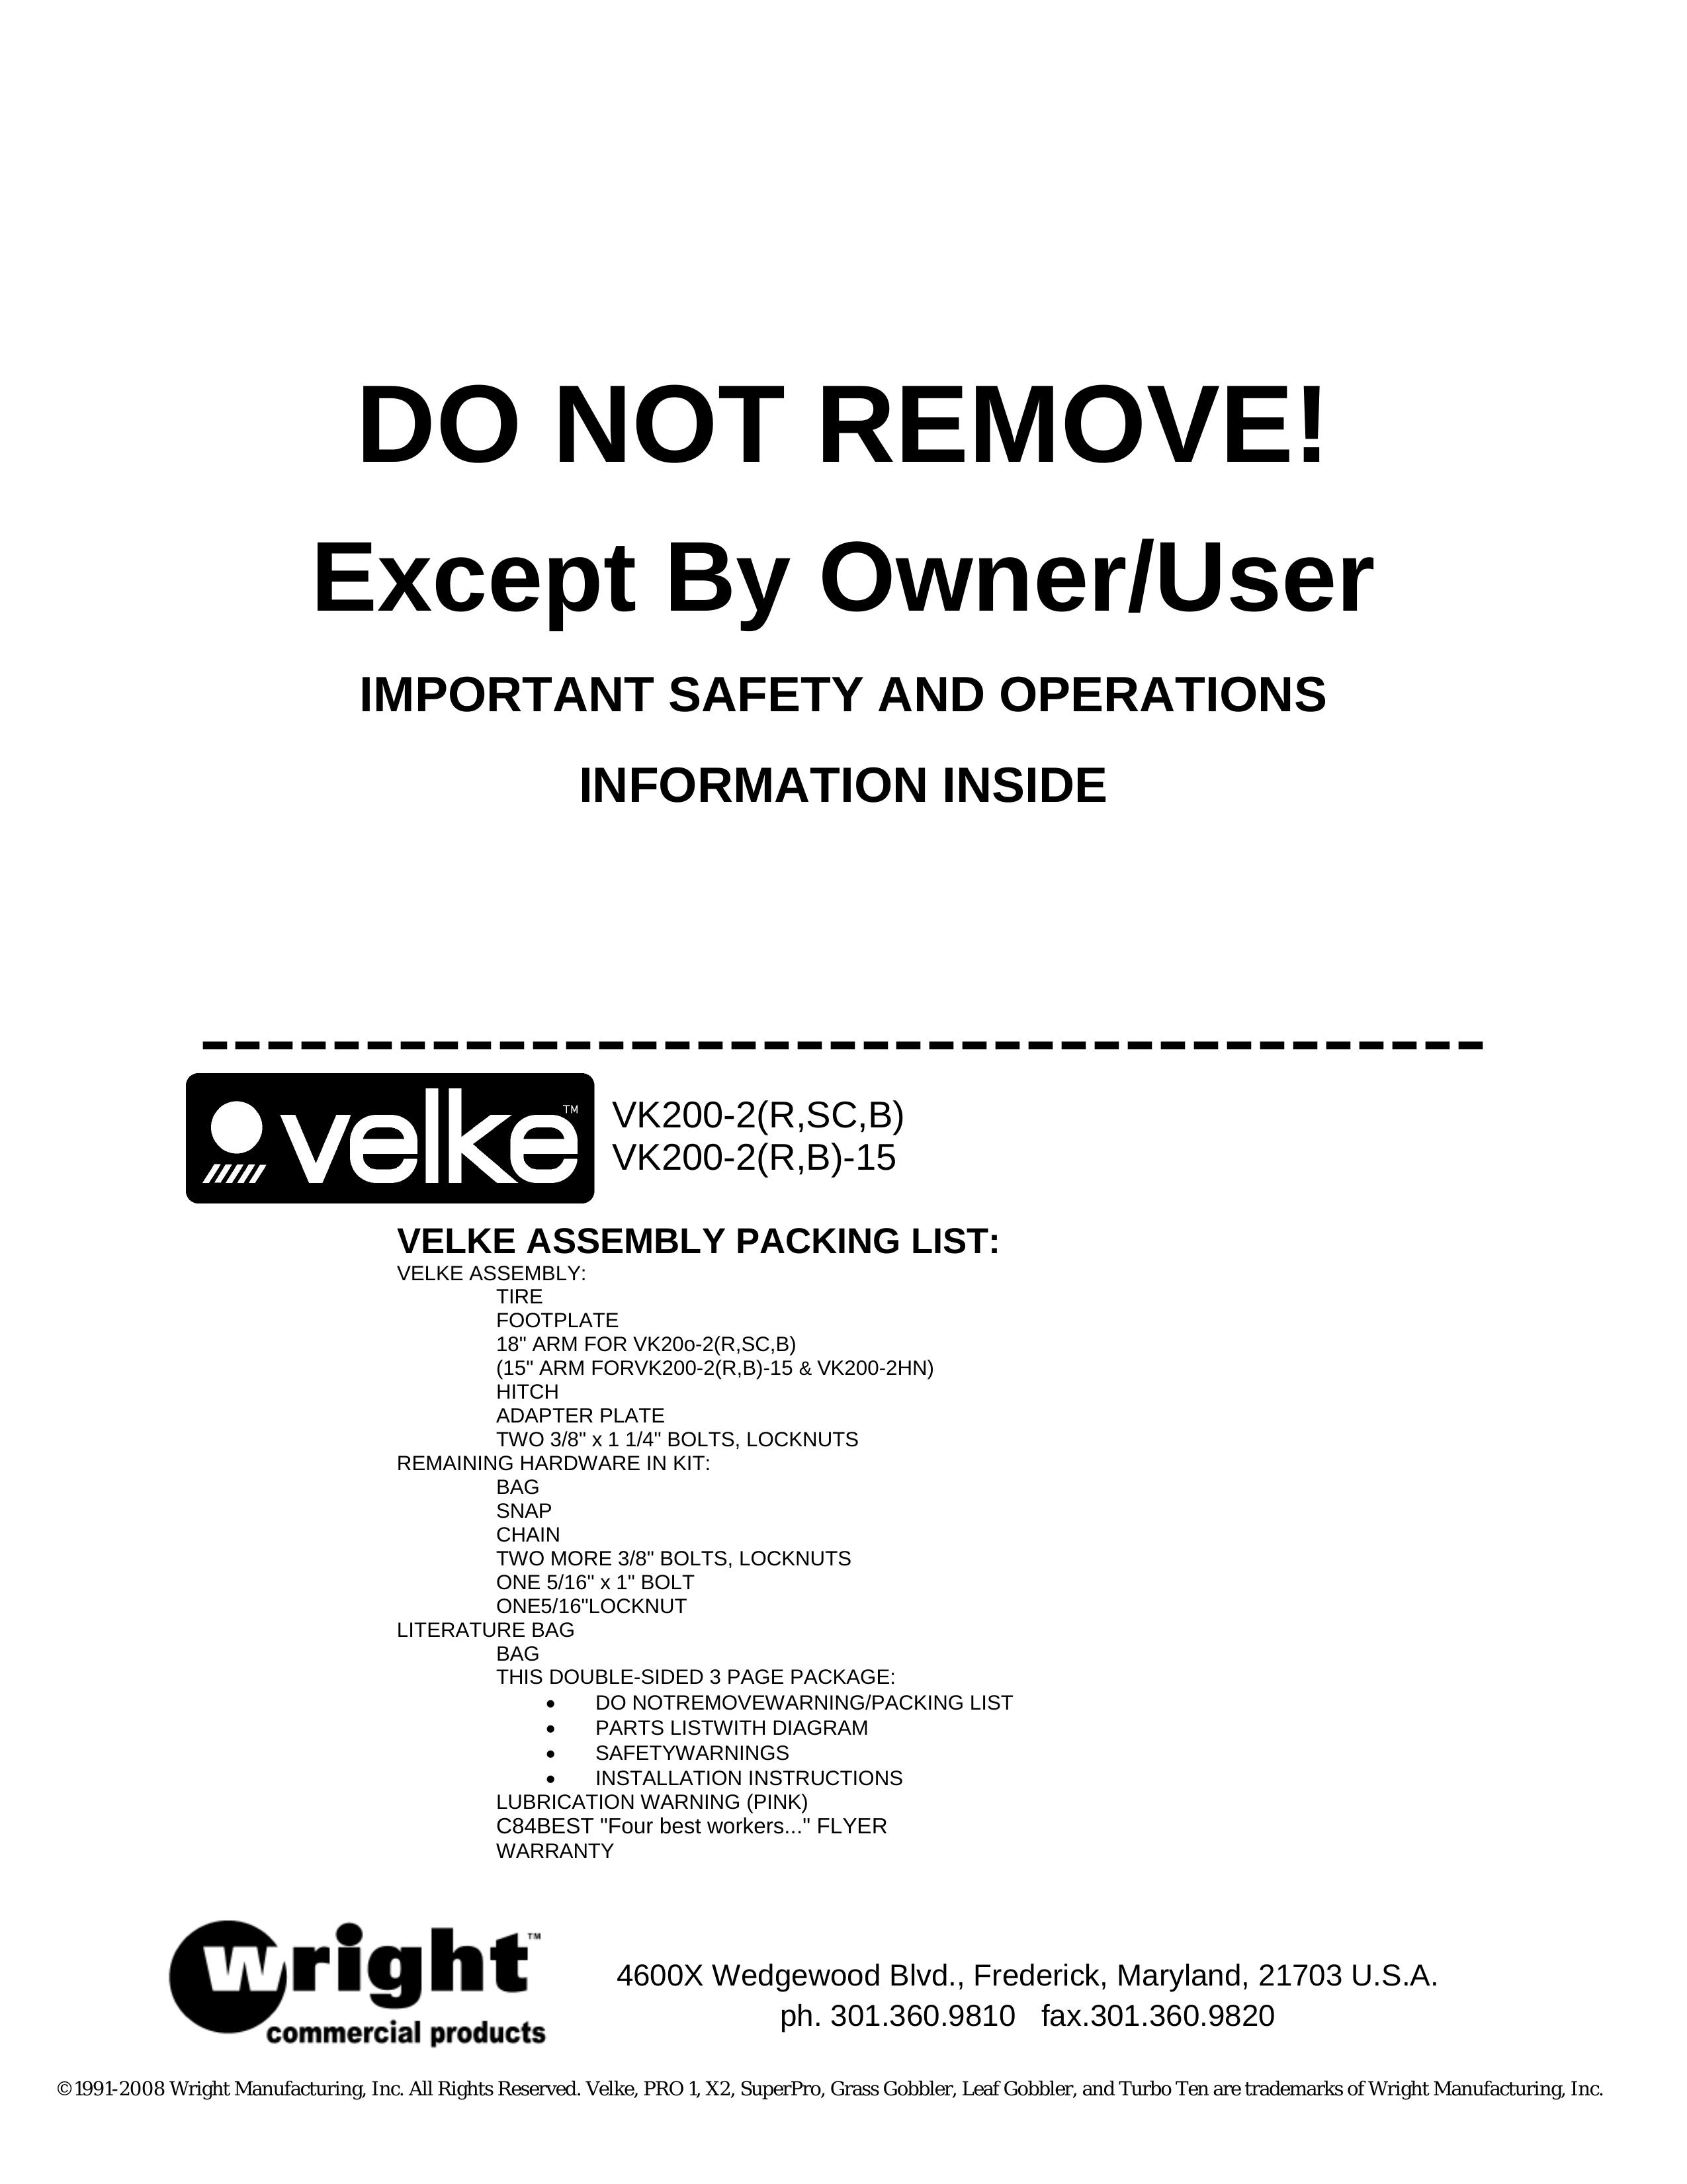 Wright Manufacturing VK200-2 Lawn Mower User Manual